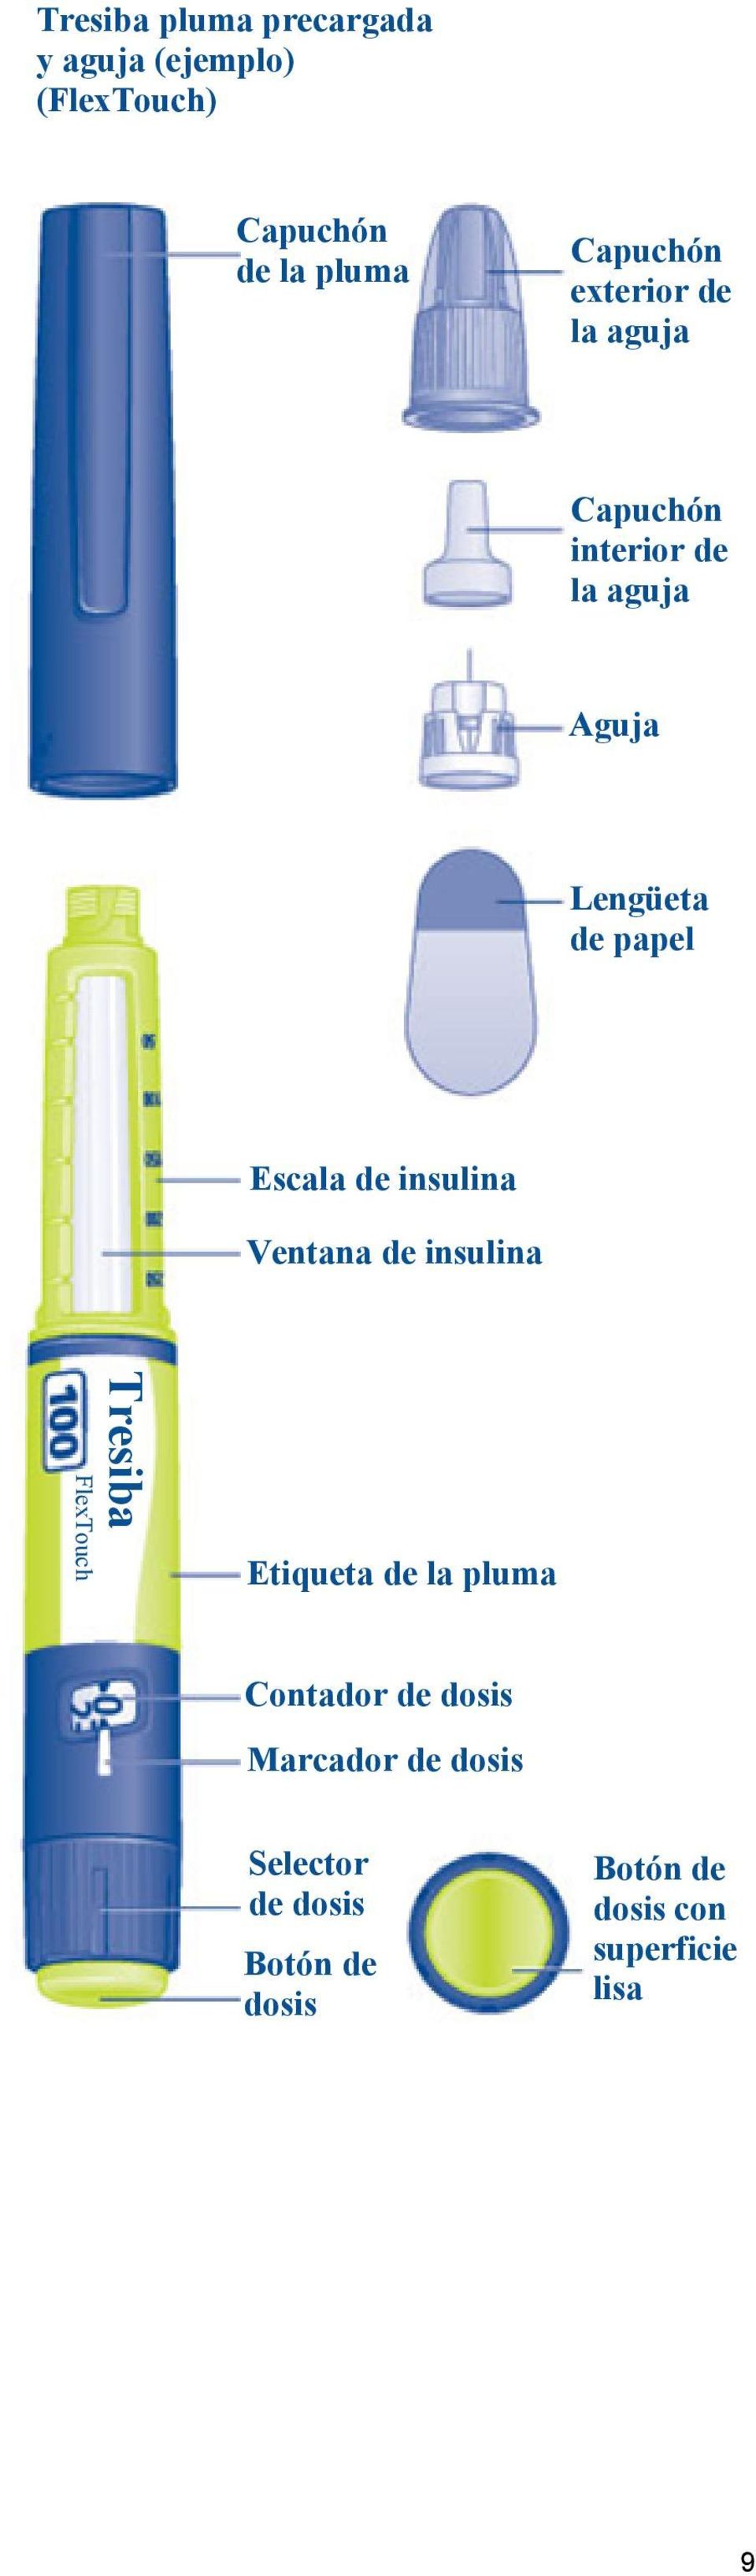 insulina Ventana de insulina Tresiba FlexTouch Etiqueta de la pluma Contador de dosis